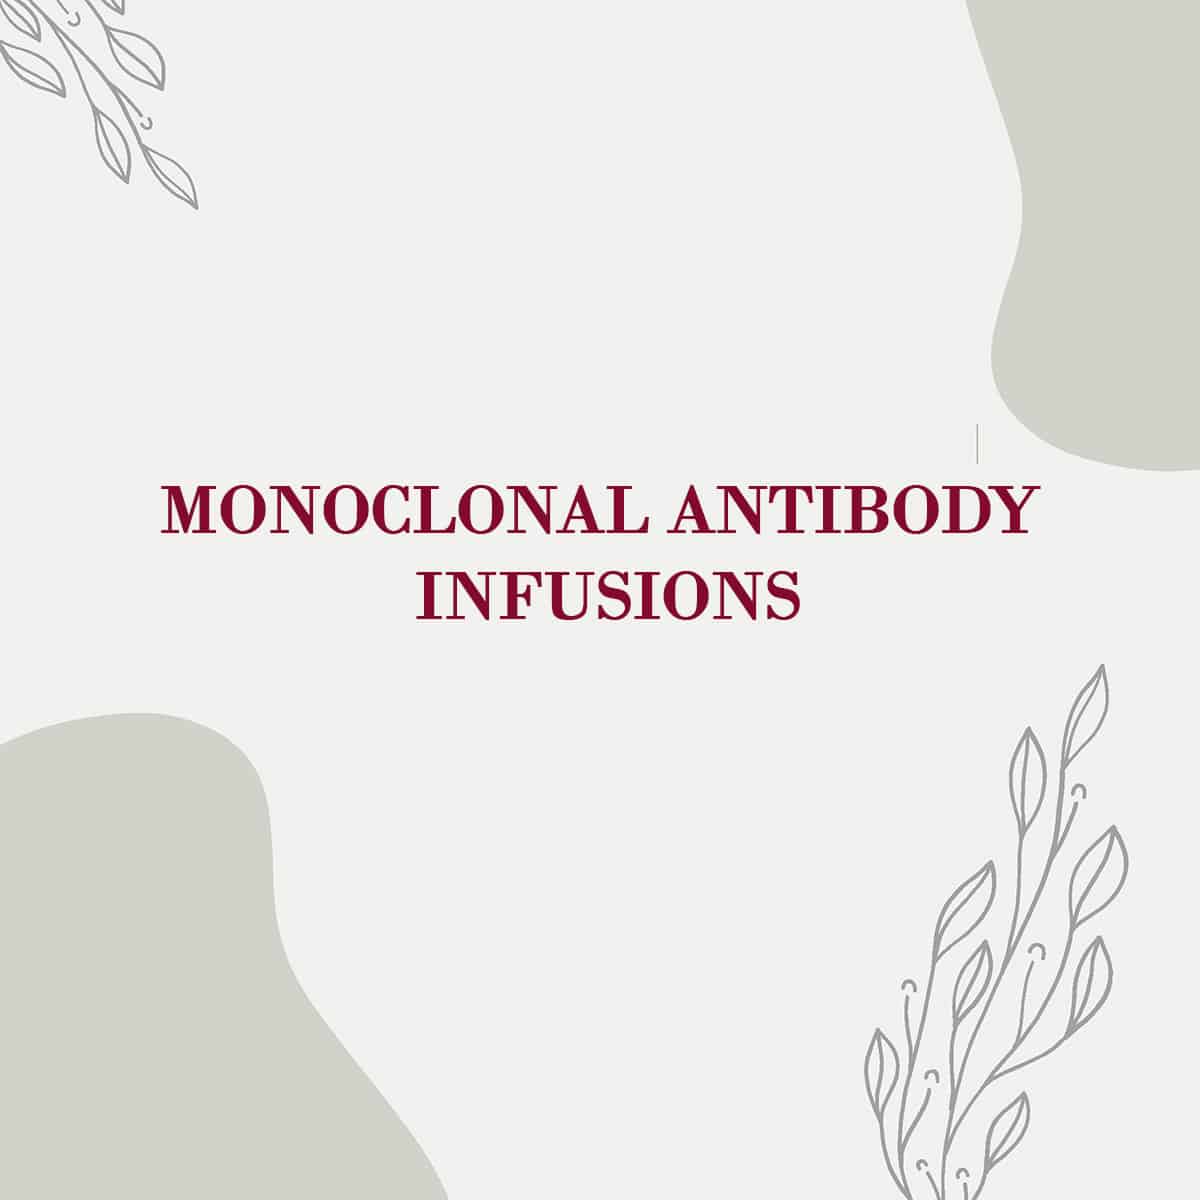 Monoclonal Antibody Infusions